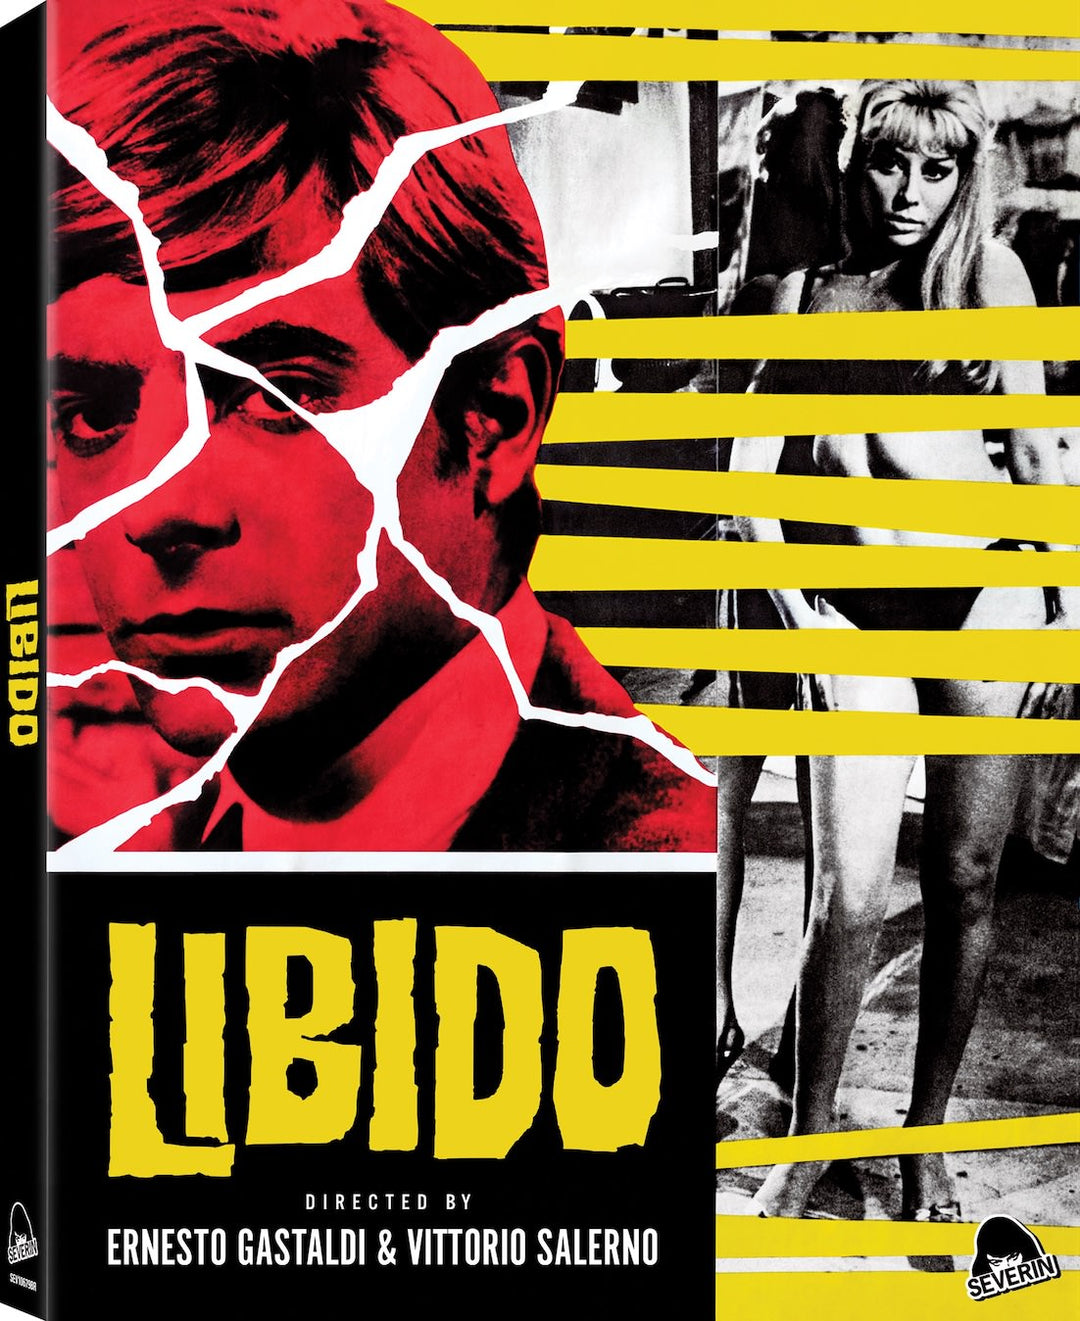 Libido [Blu-ray w/Slipcover]